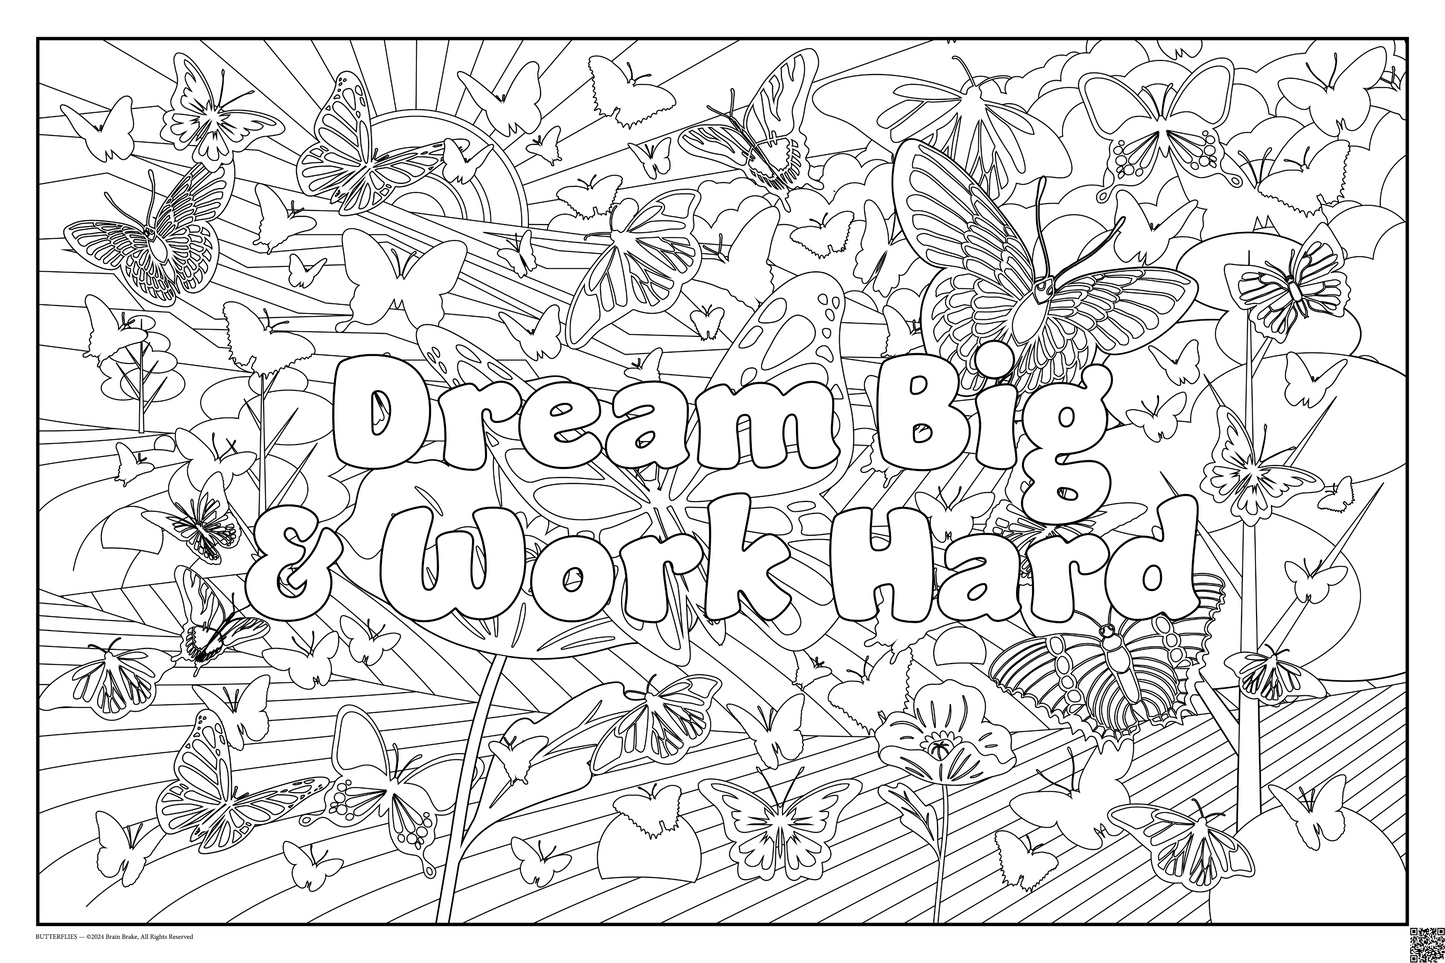 Build Community: Dream Big & Work Hard